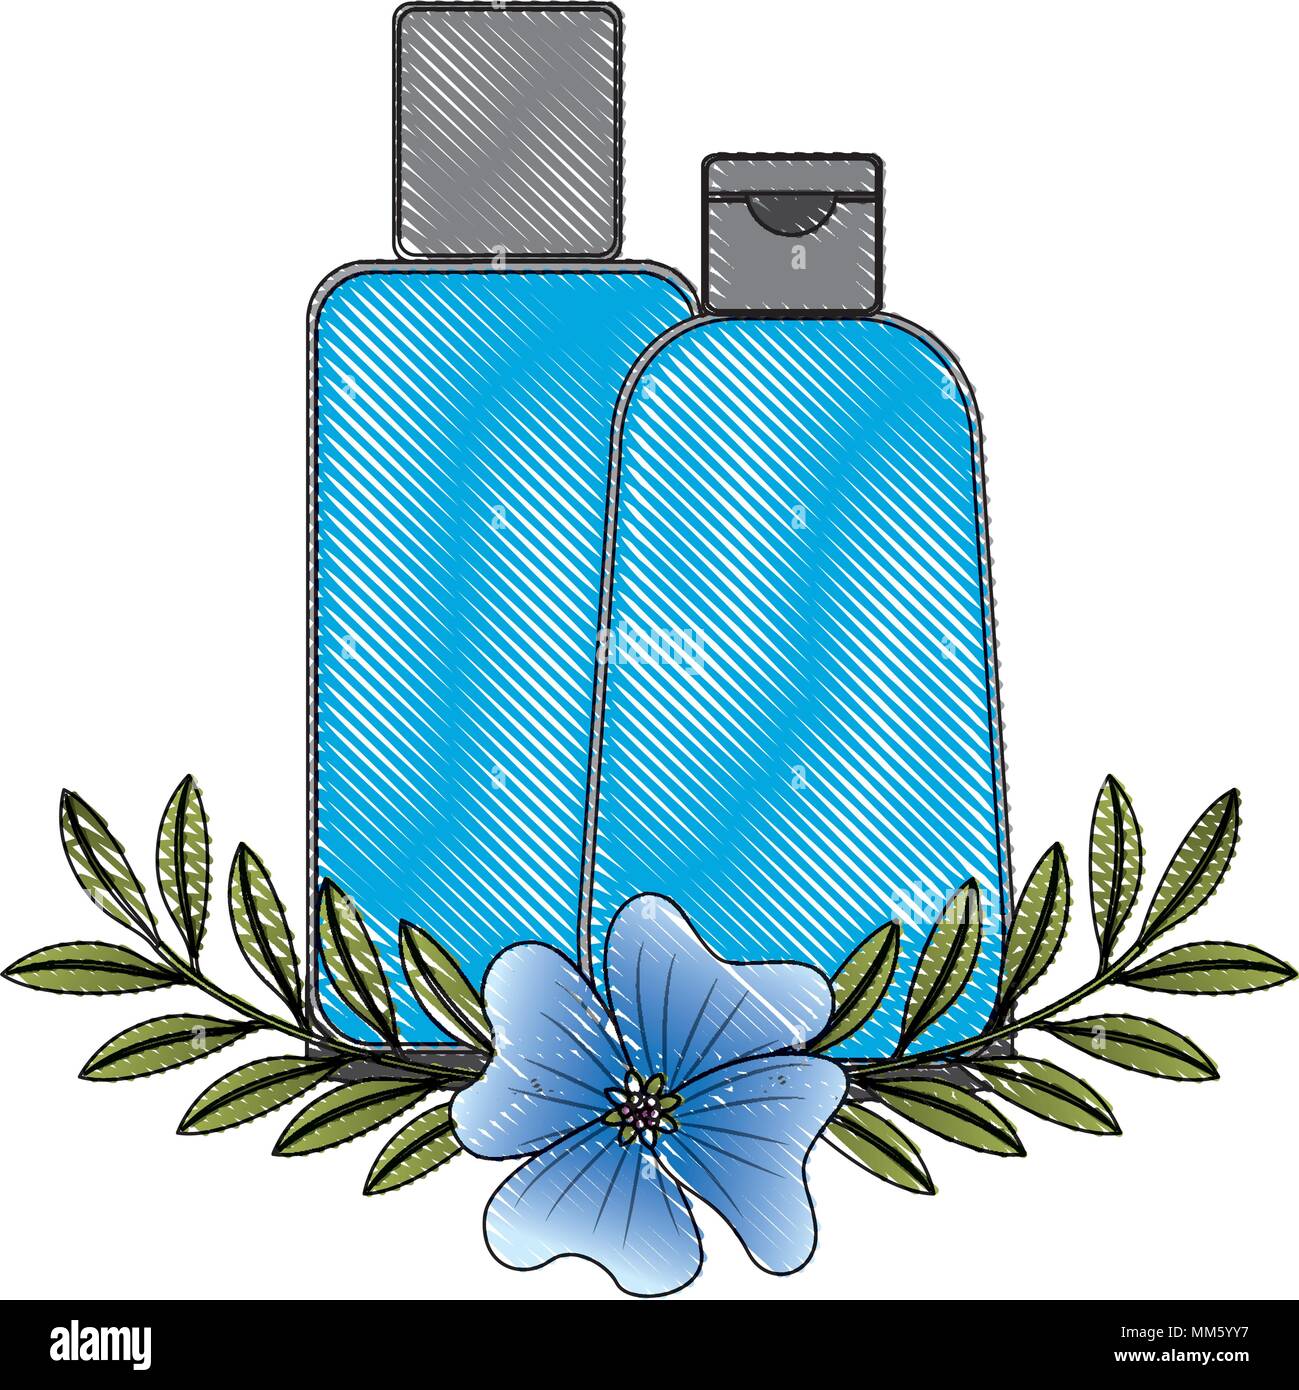 Bagóvit | Shampoo & Conditioner | Product Design | Imaginity